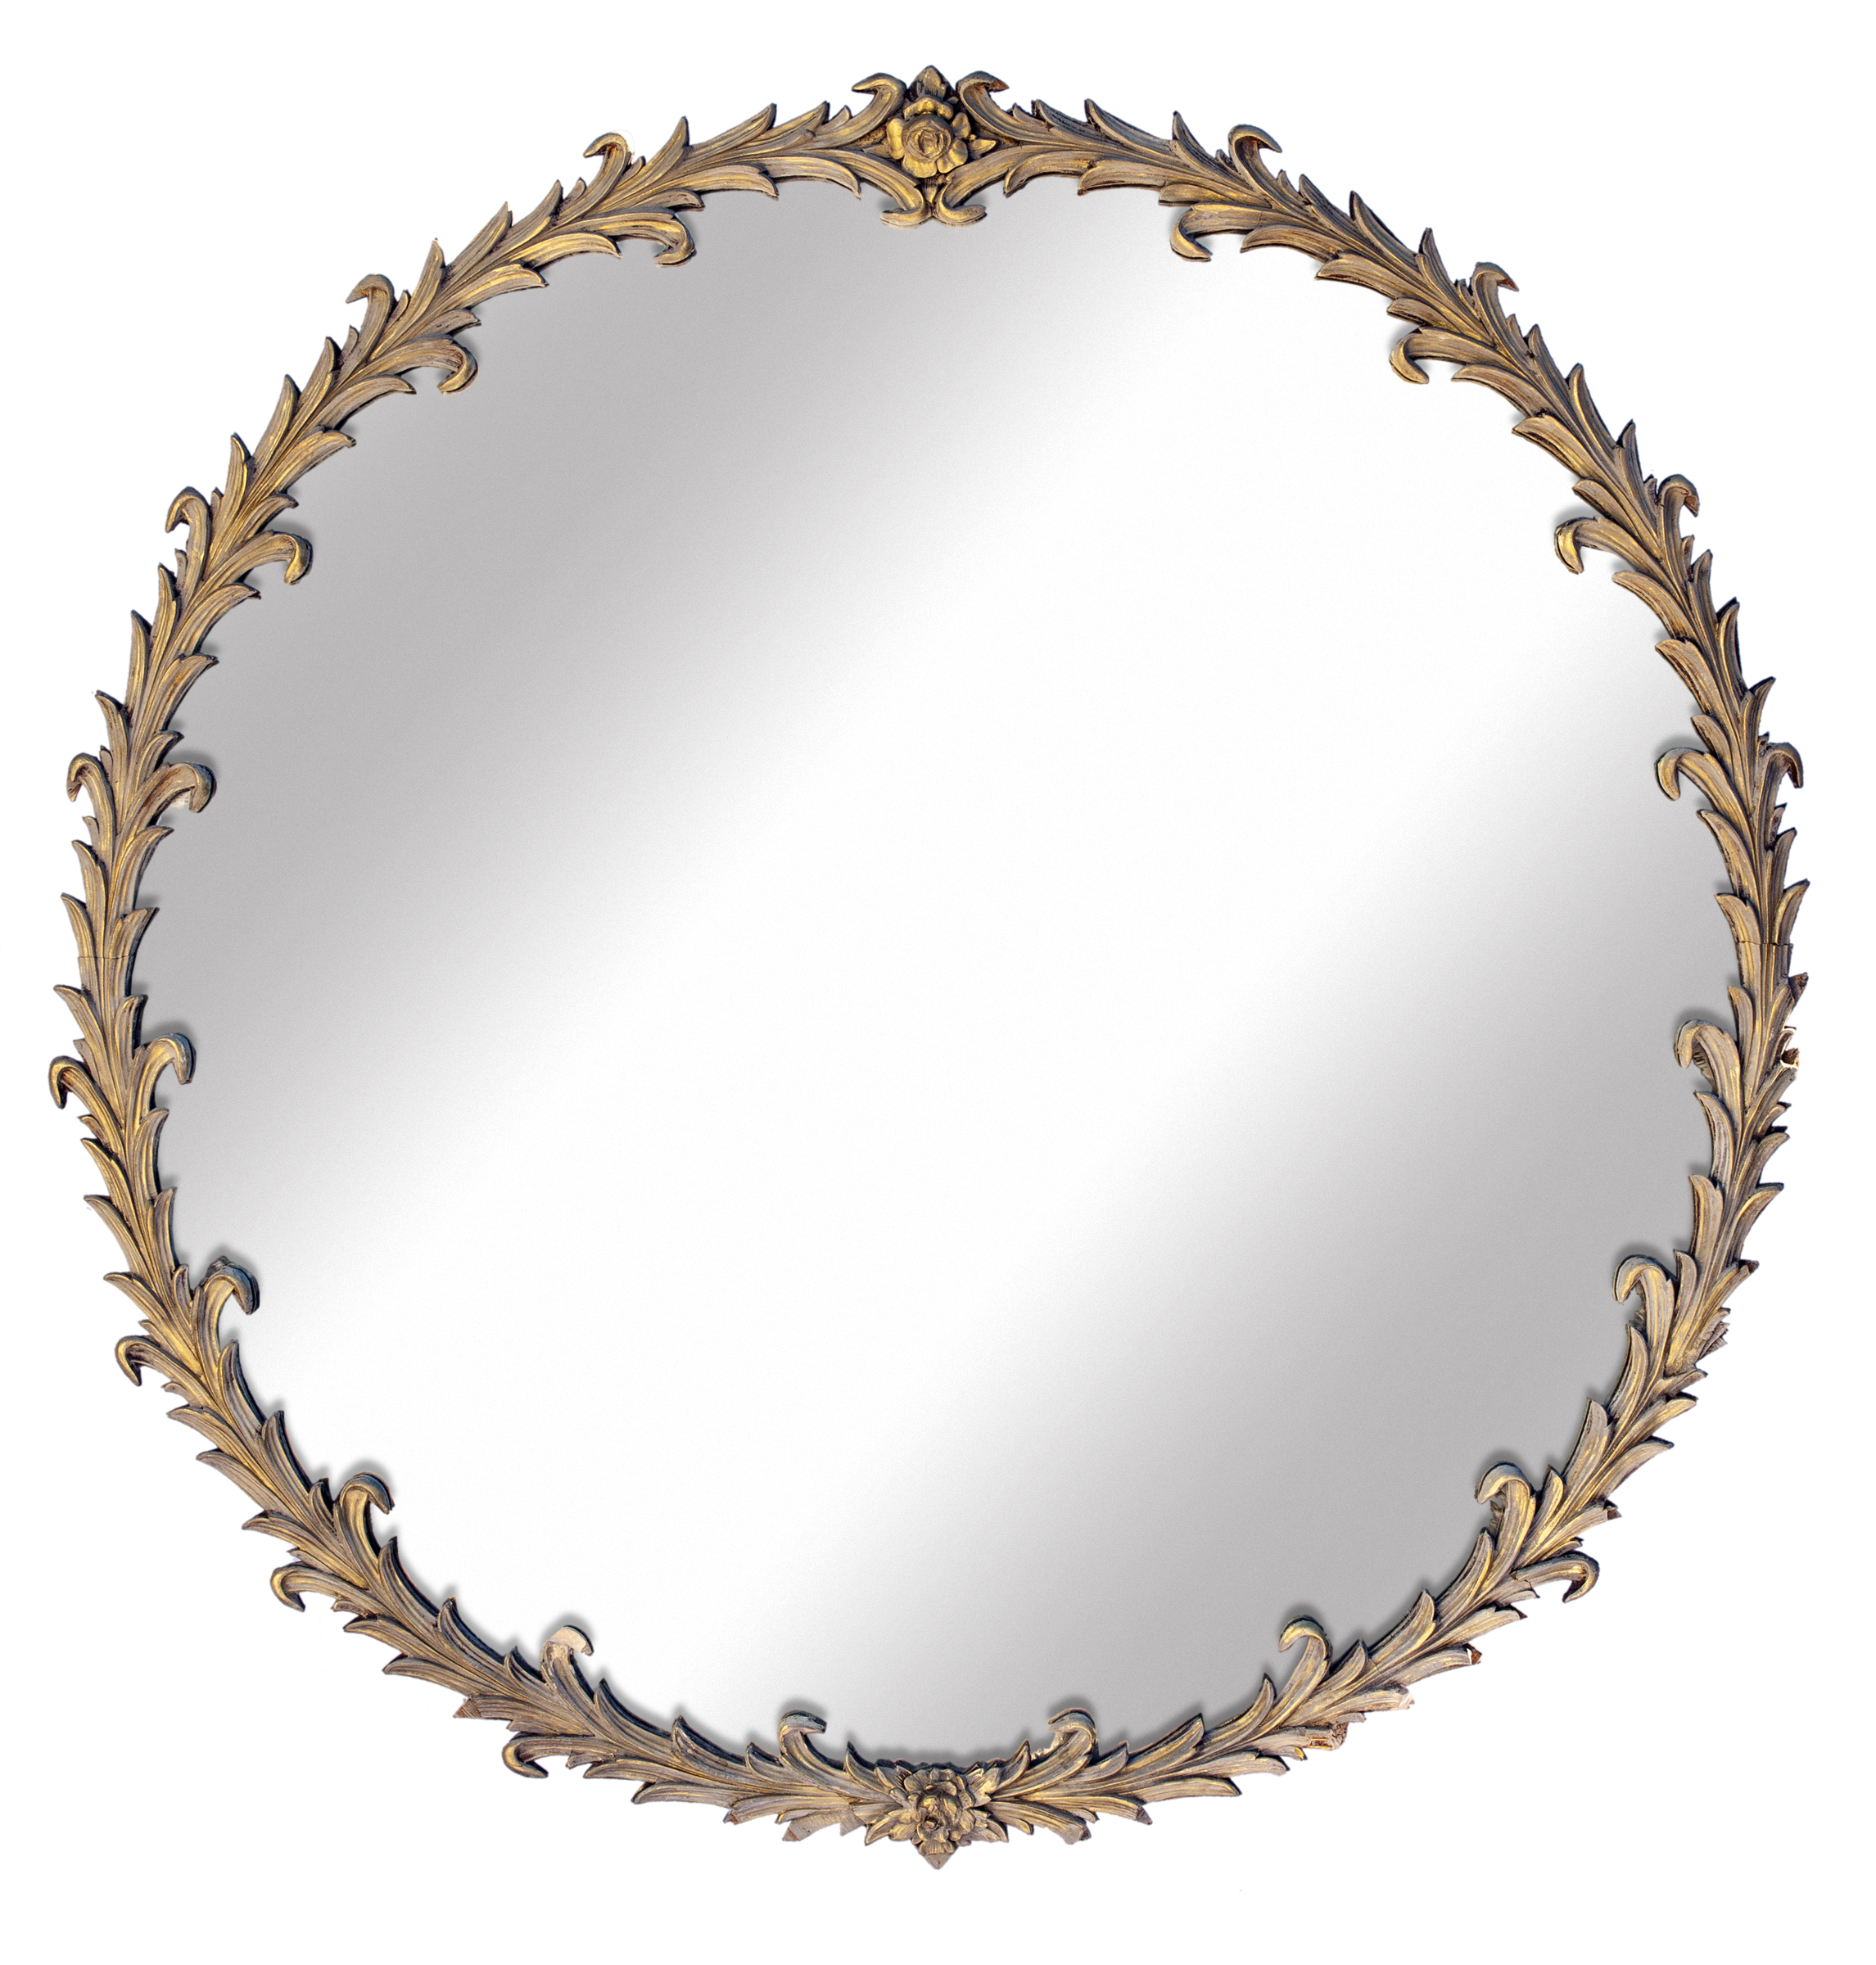 Round Mirror with Spikey Vines & Flowers~P77658203